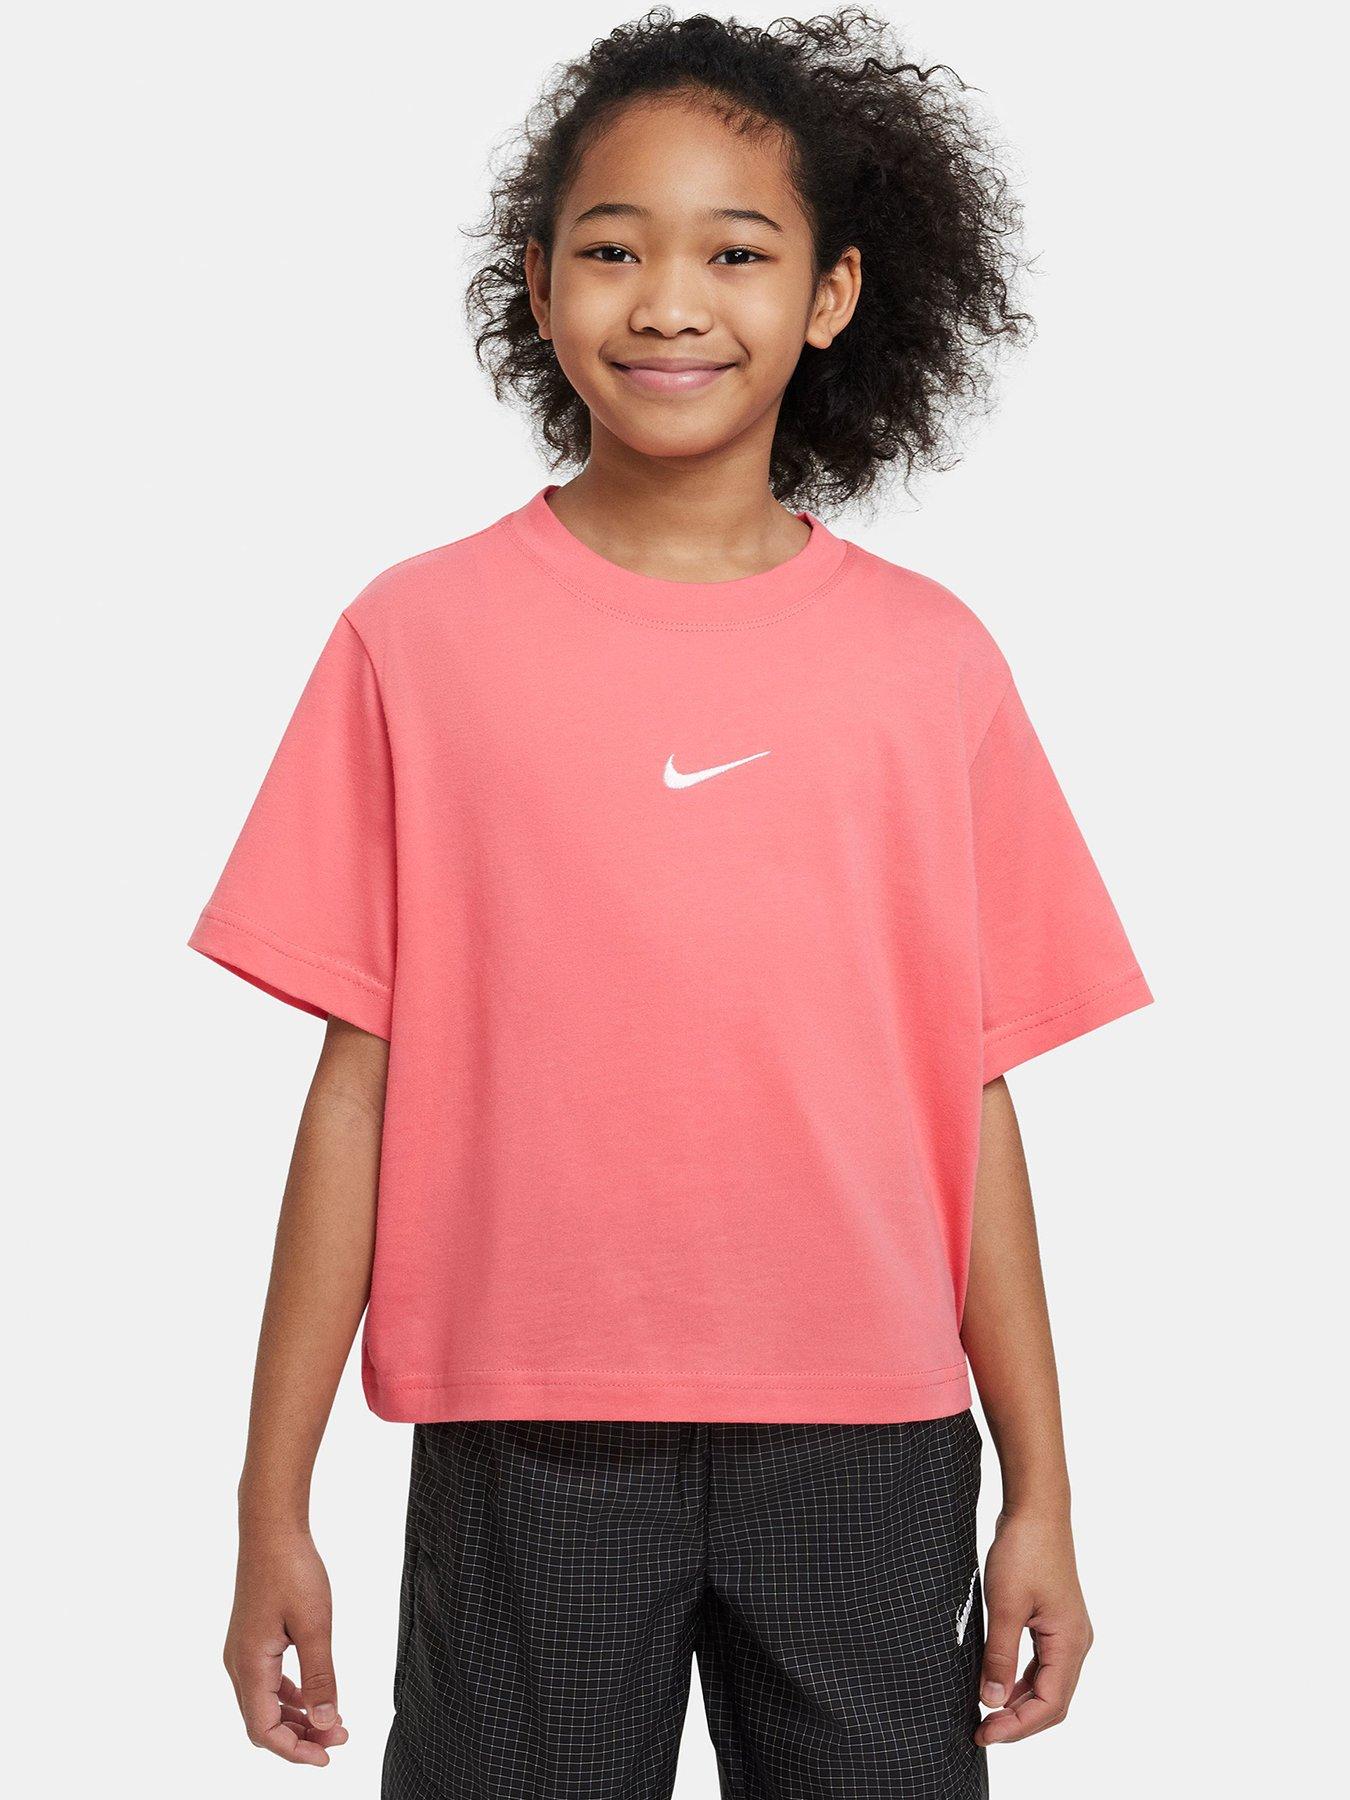 Kip traagheid Extreem belangrijk Tops & t-shirts | Girls clothes | Child & baby | Nike | Very Ireland